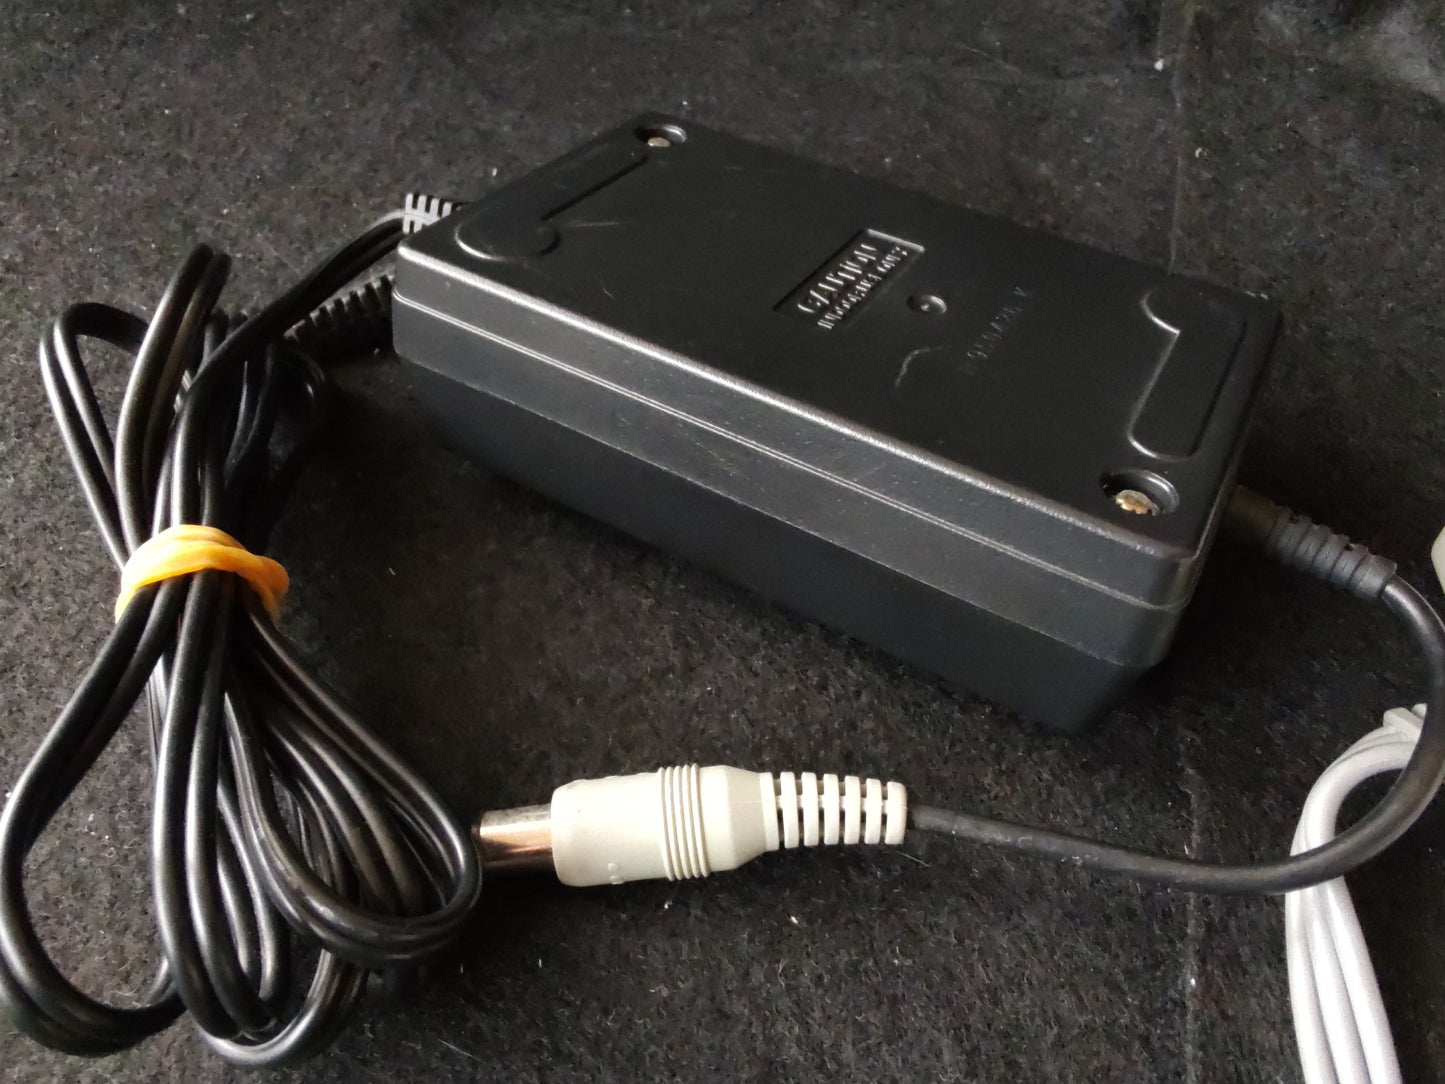 AC Adapter SHVC-032 and AV selector set for Nintendo Satellaview SHVC-033-f0908-